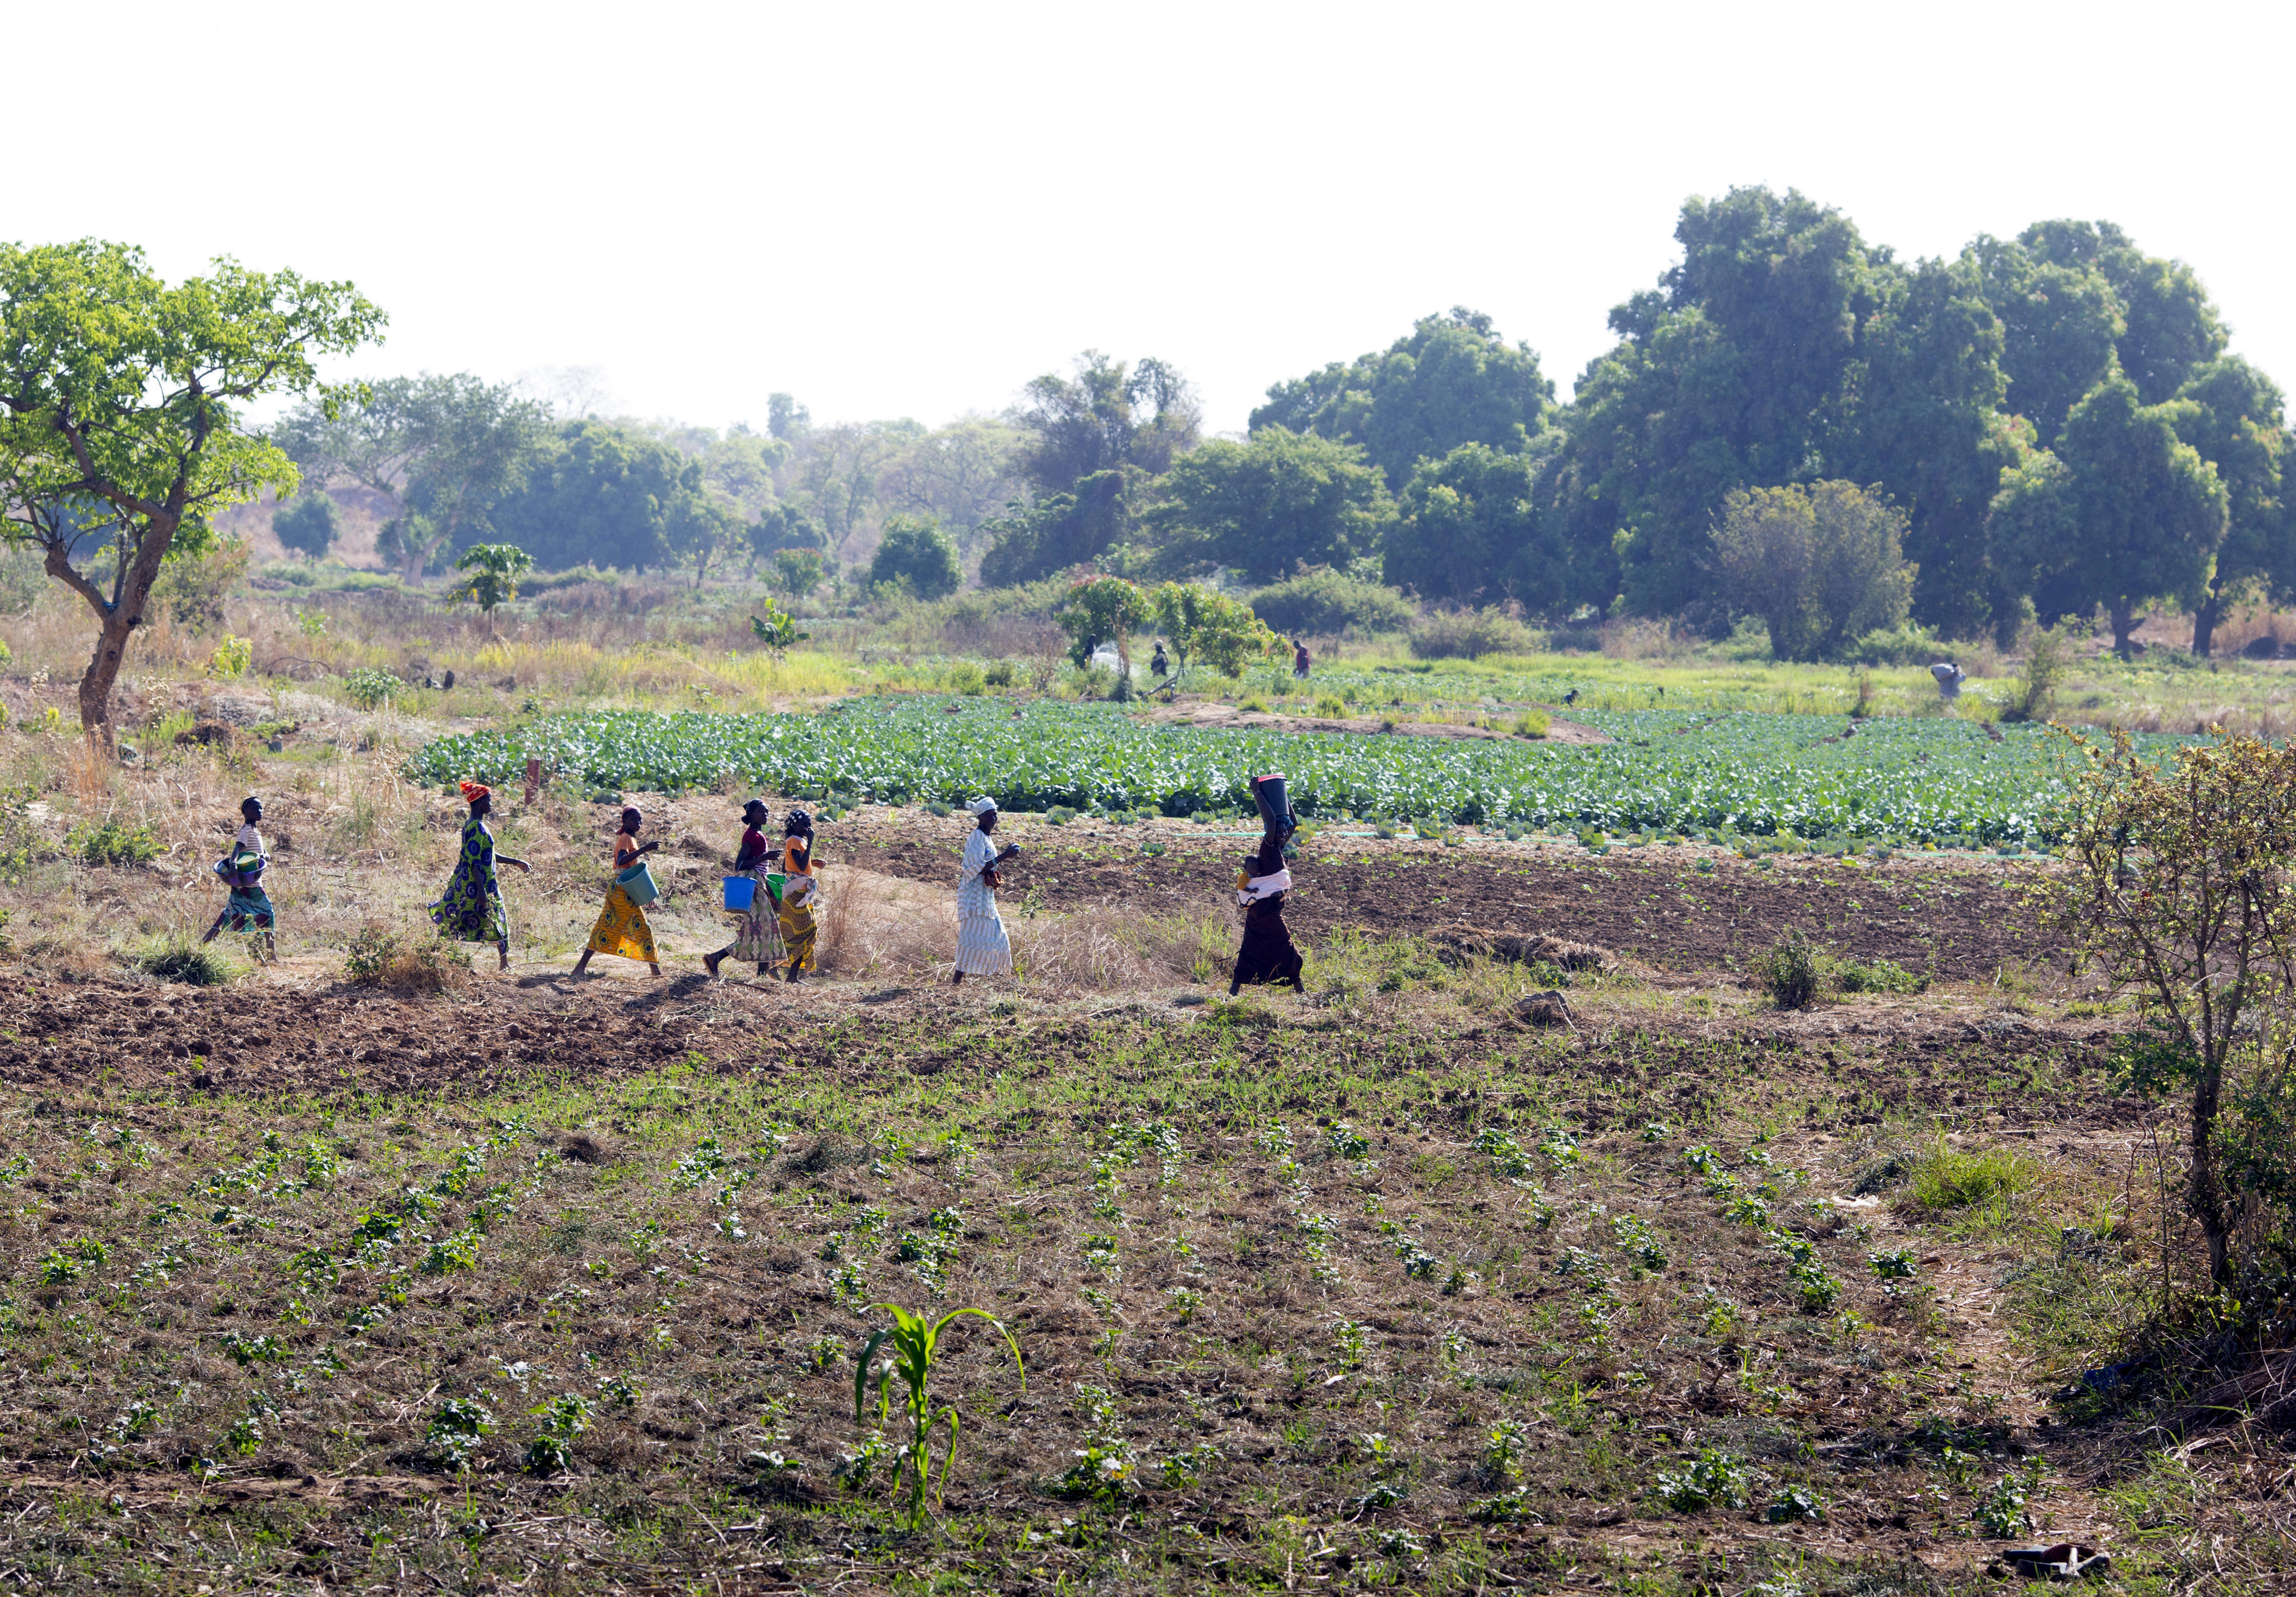 Women farmers on their way to the field in Beledougou, Mali